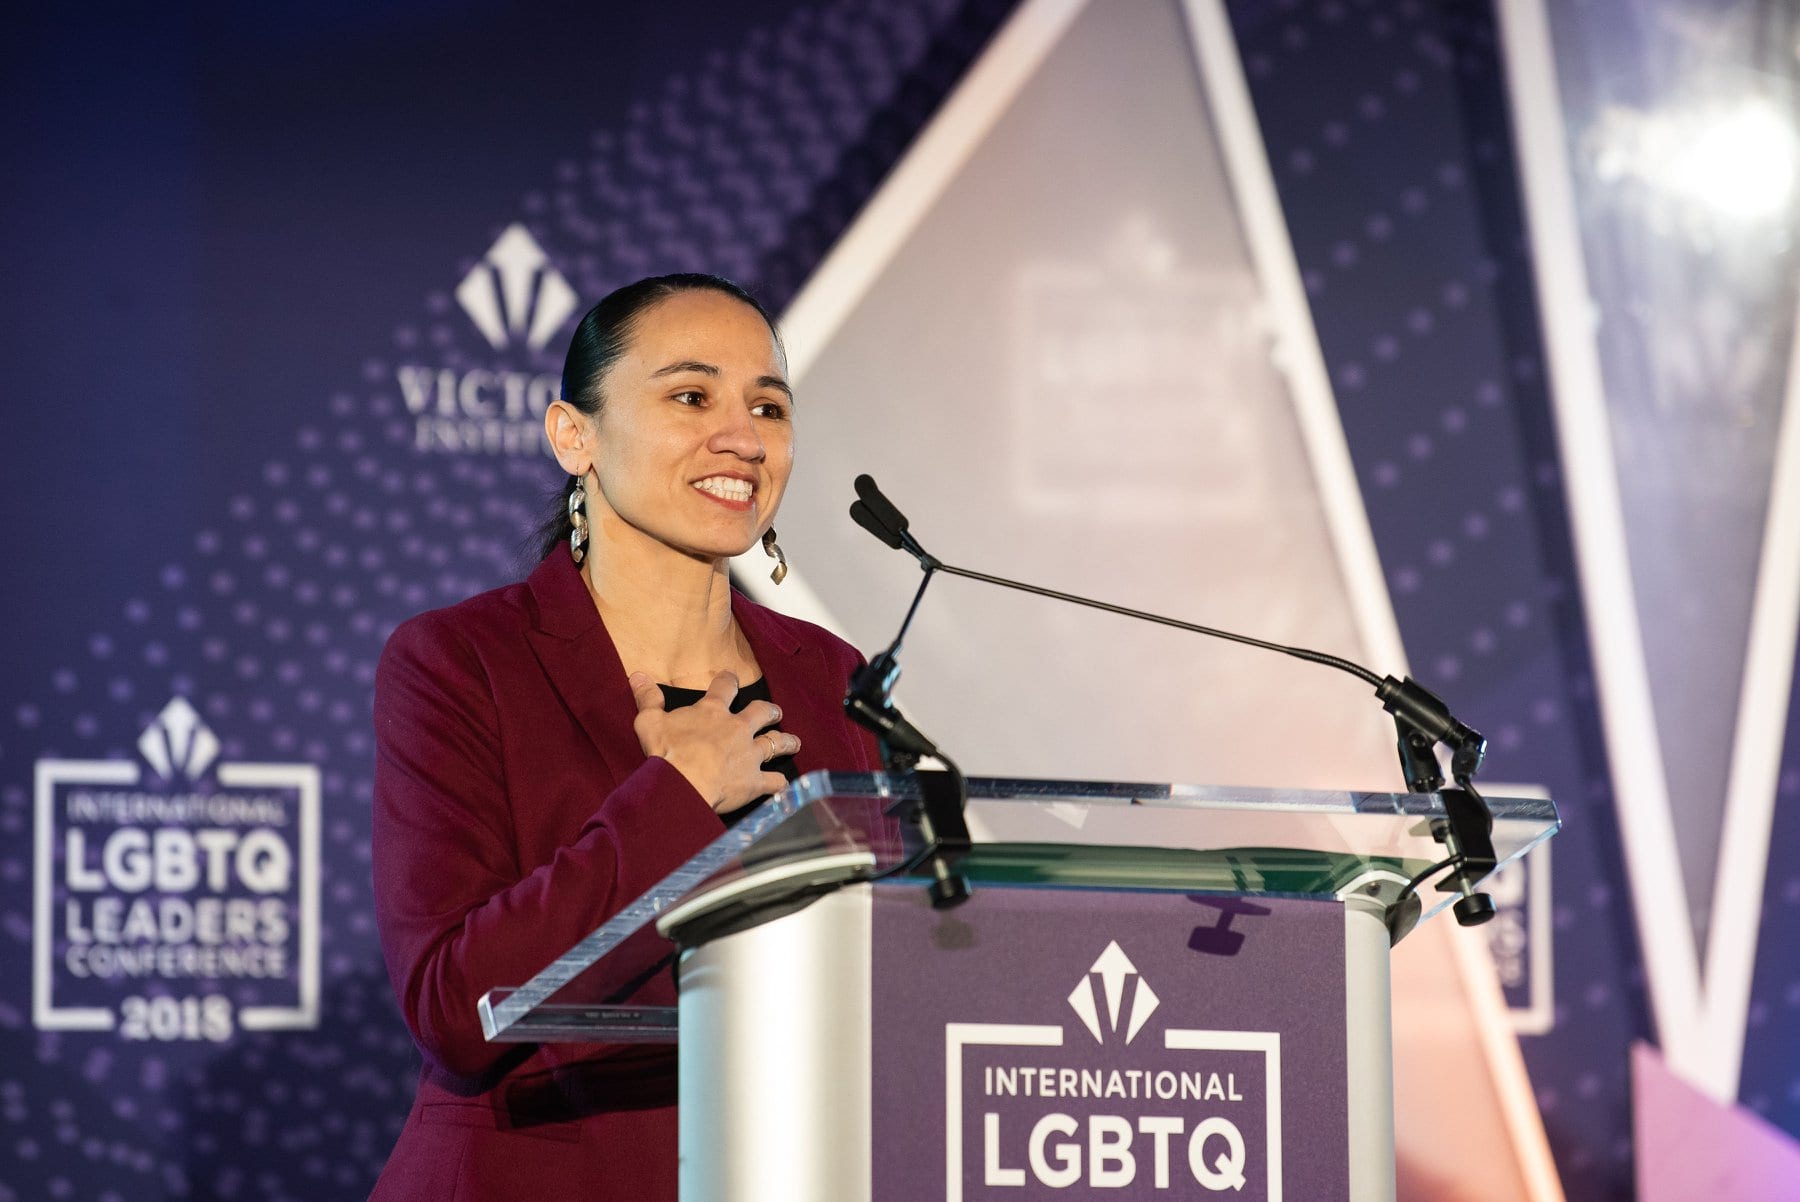 U.S. Congresswoman Sharice Davids speaks at the 2018 International LGBTQ Leaders Conference in Washington, D.C.